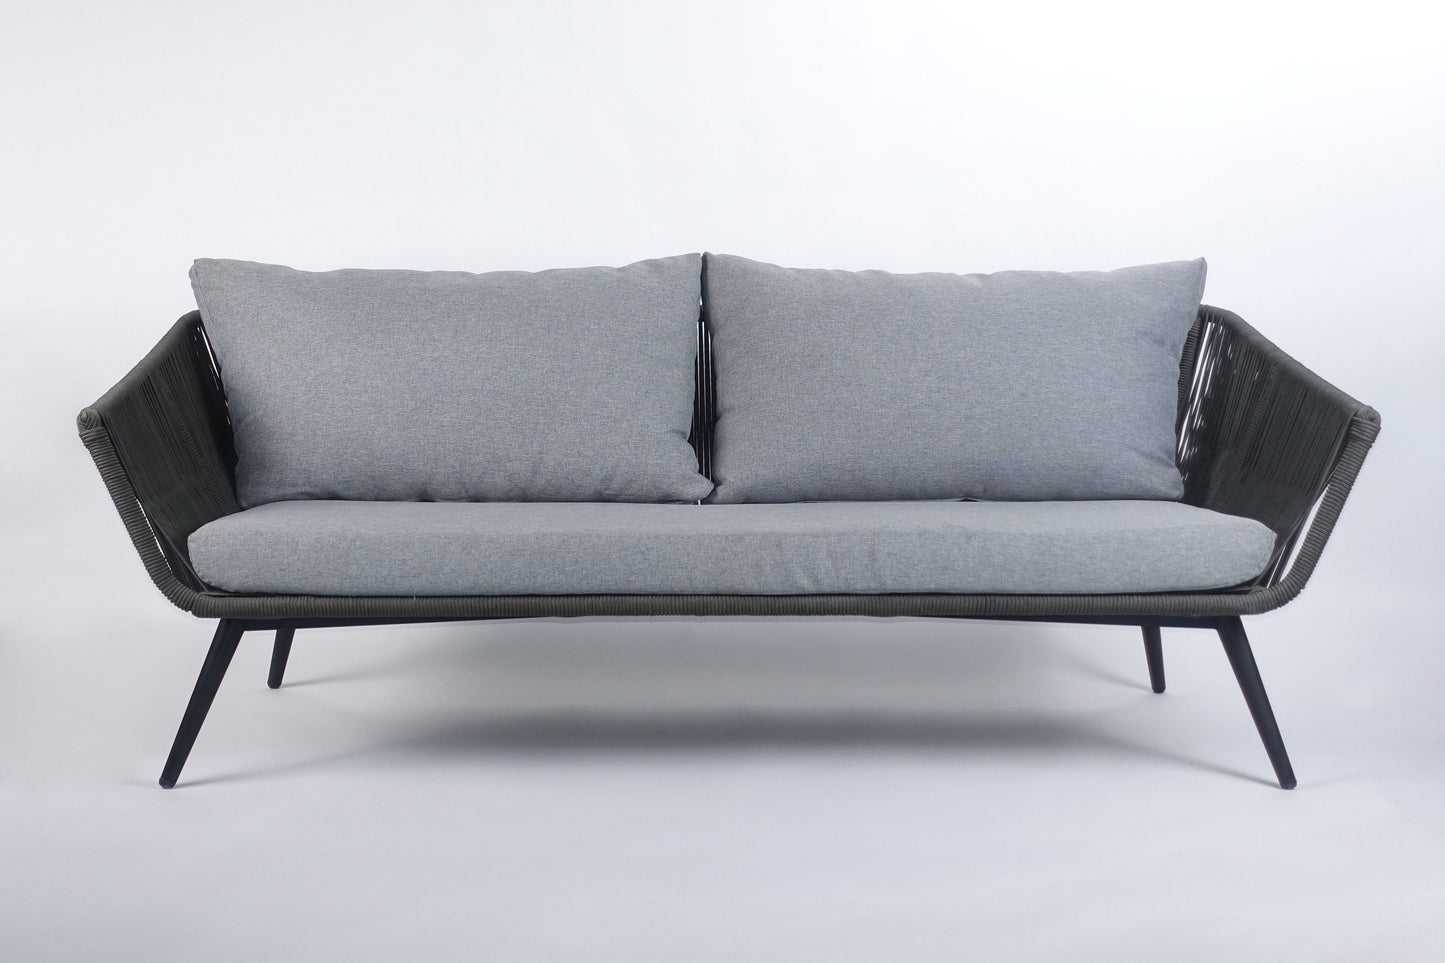 Renava Panama - Modern Outdoor Sofa Set